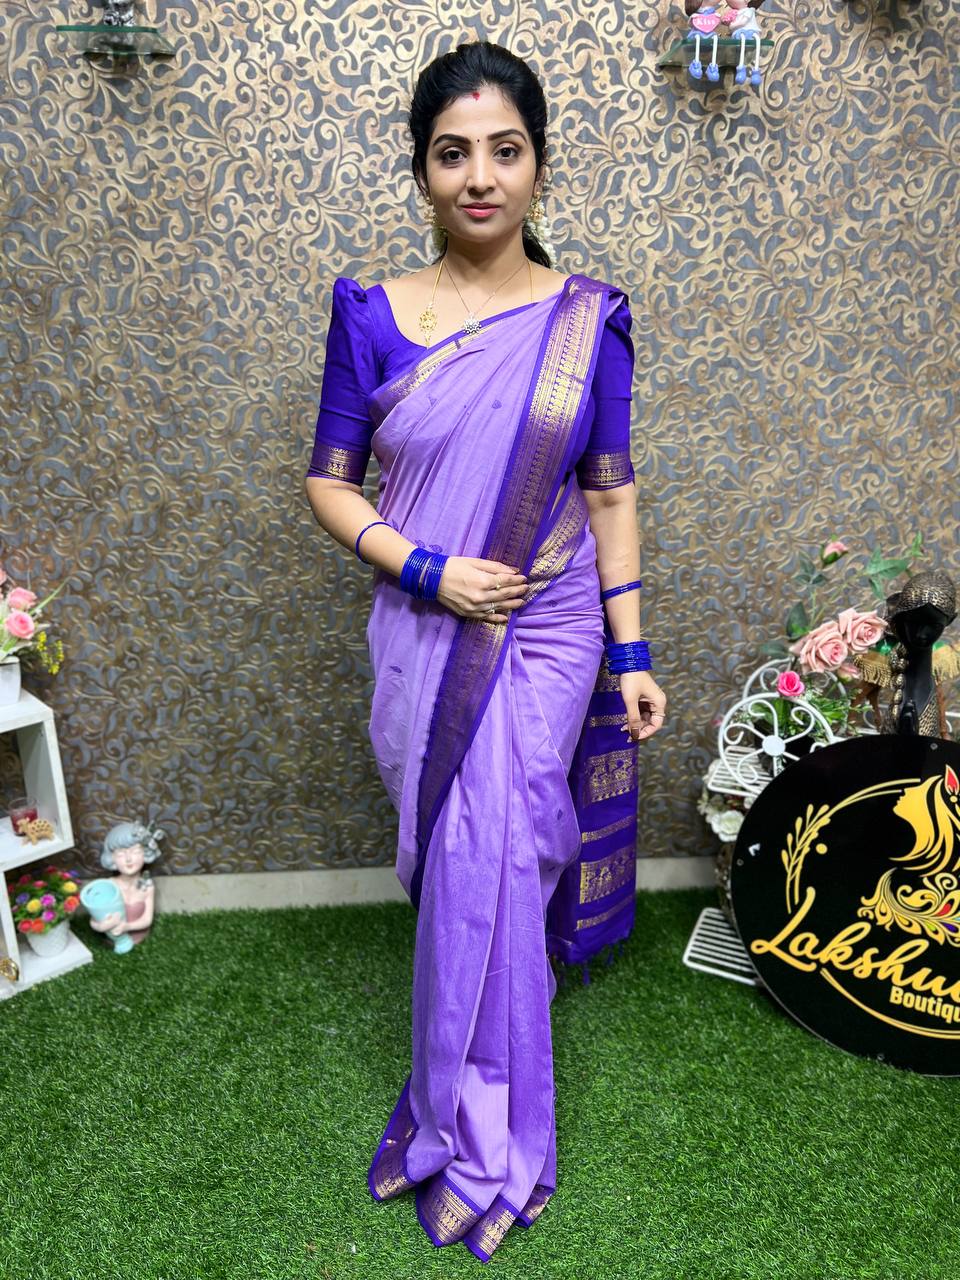 Kalyani Cotton Saree, Women's Fashion, Dresses & Sets, Traditional